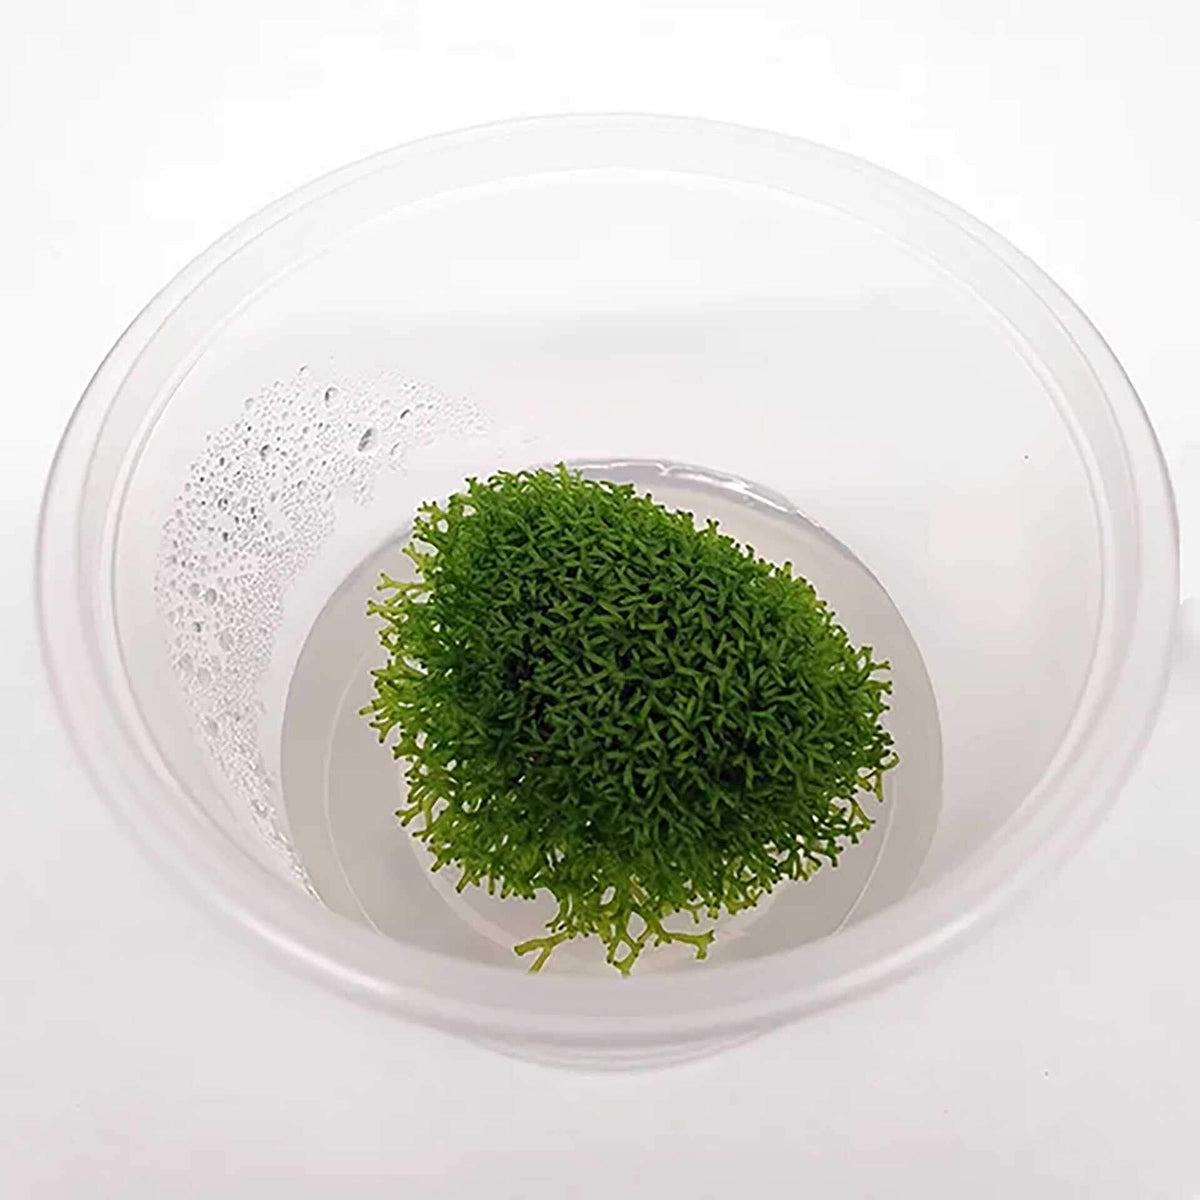 Riccia fluitans ‘Floating Crystalwort’ Live Plant - Tissue Culture